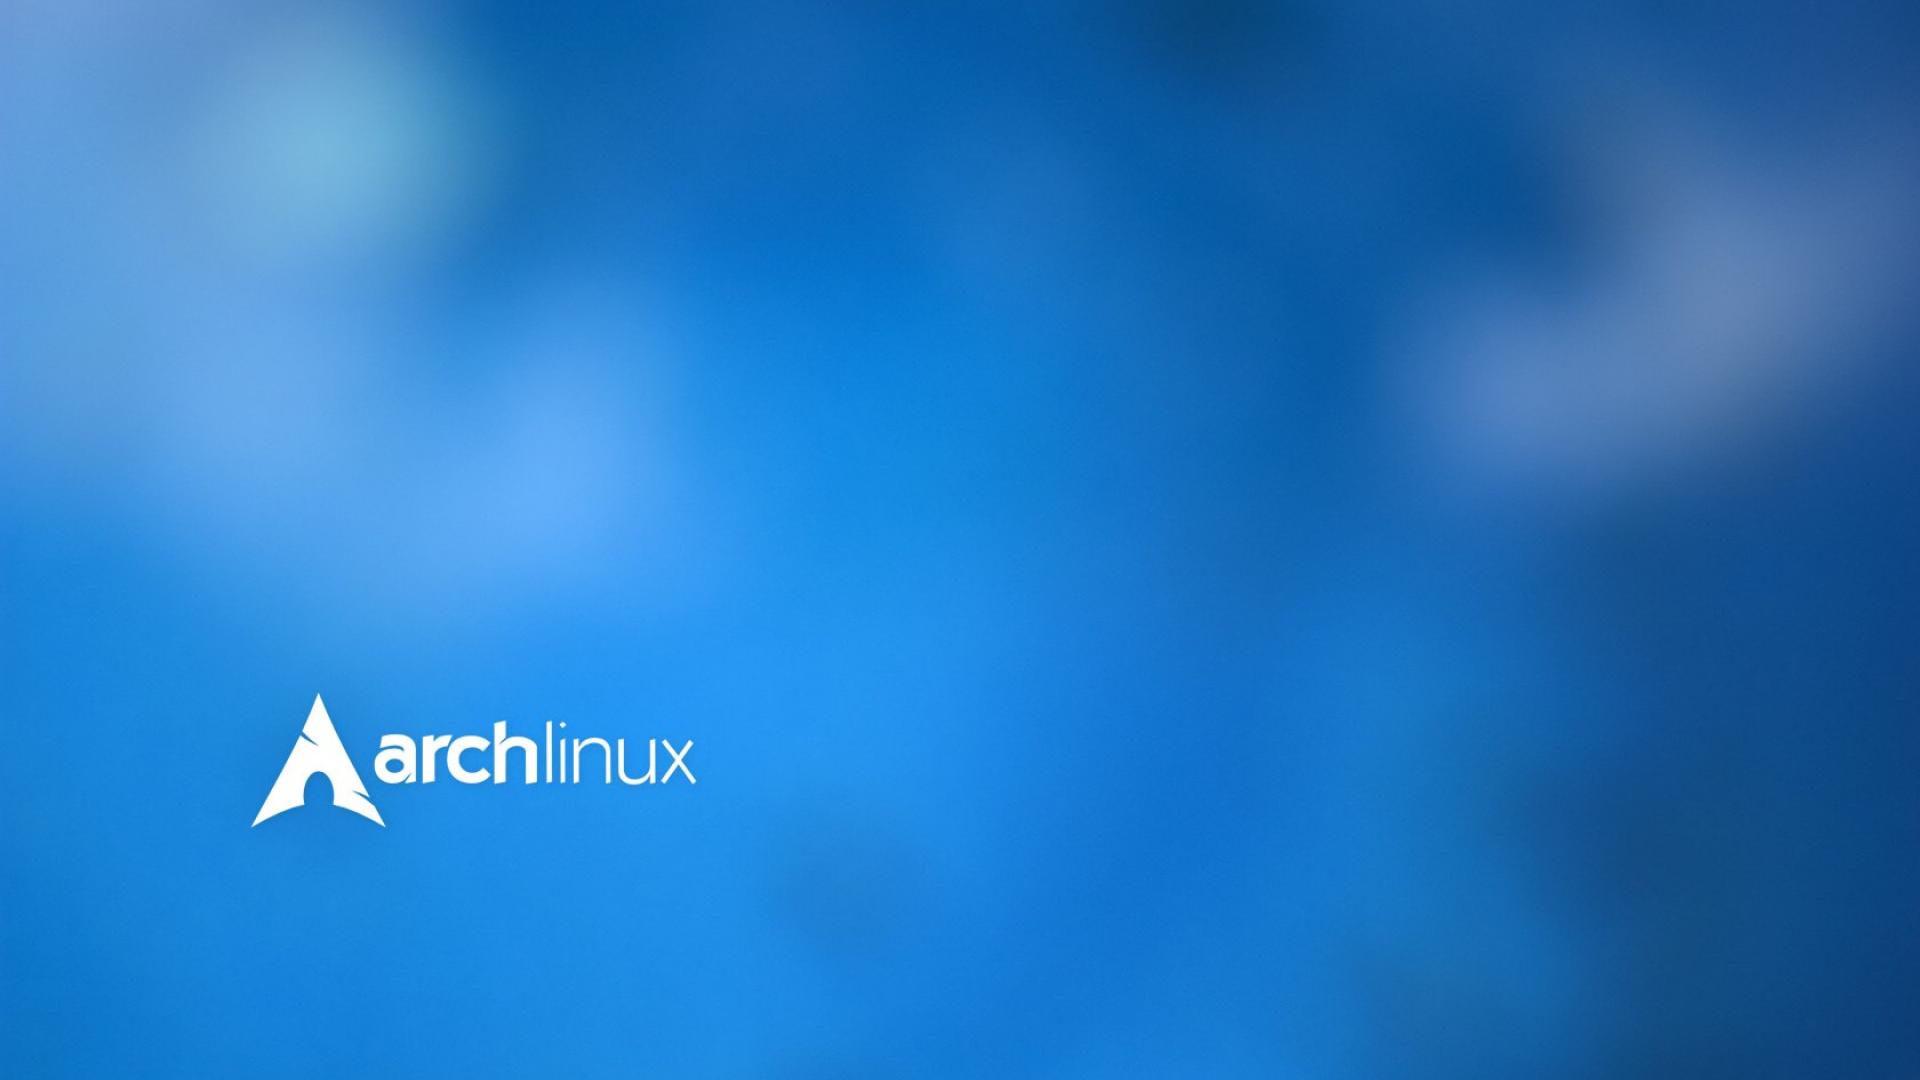 Download Free Arch Linux Background Pixelstalk Net